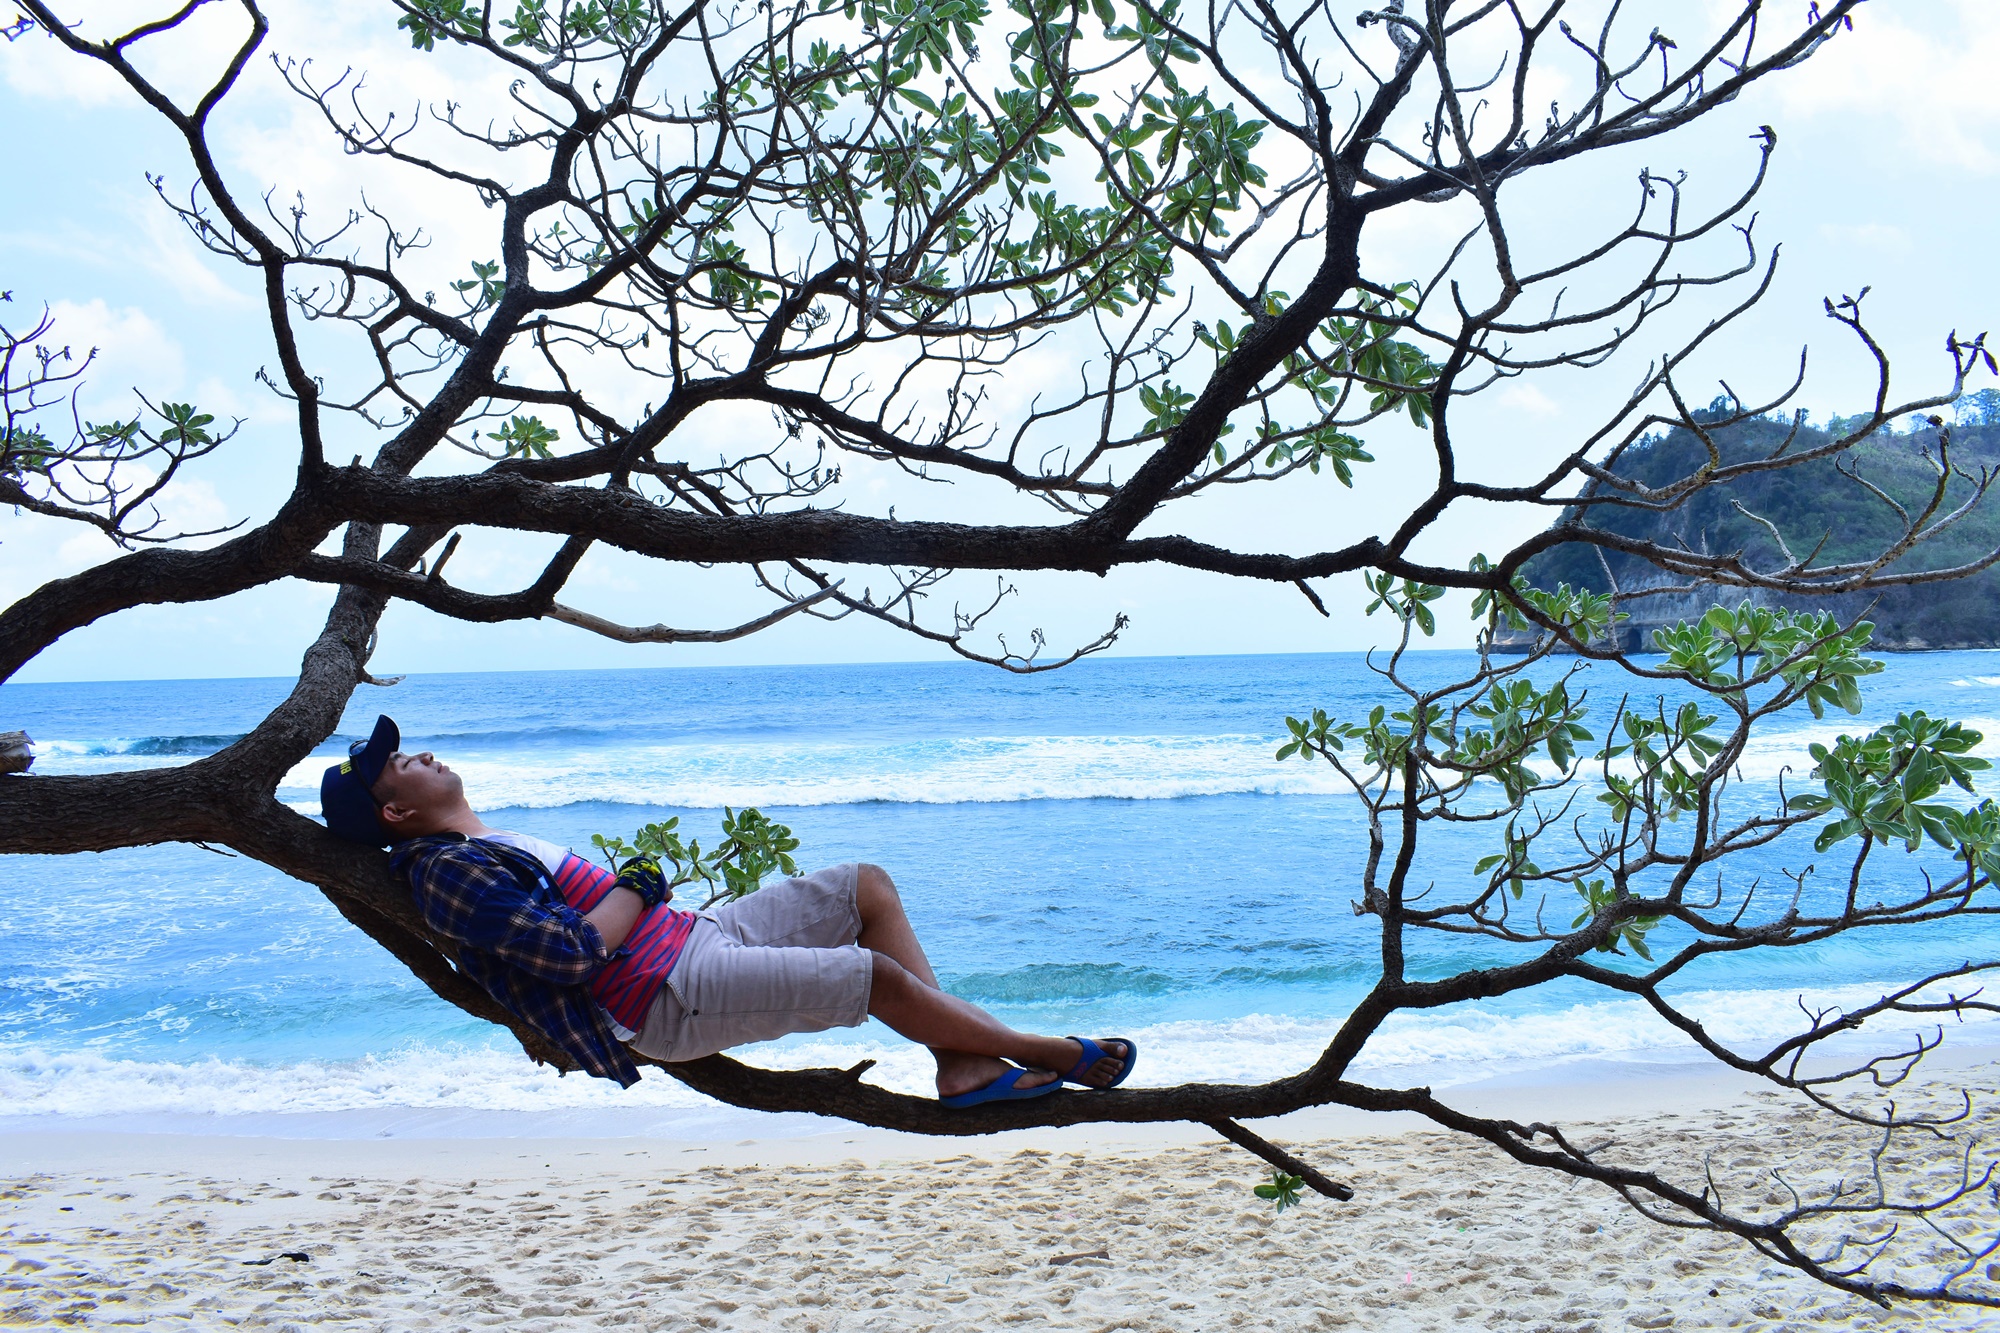 wisatawan menghabiskan waktu dengan bersantai di salah satu cabang pohon akasia